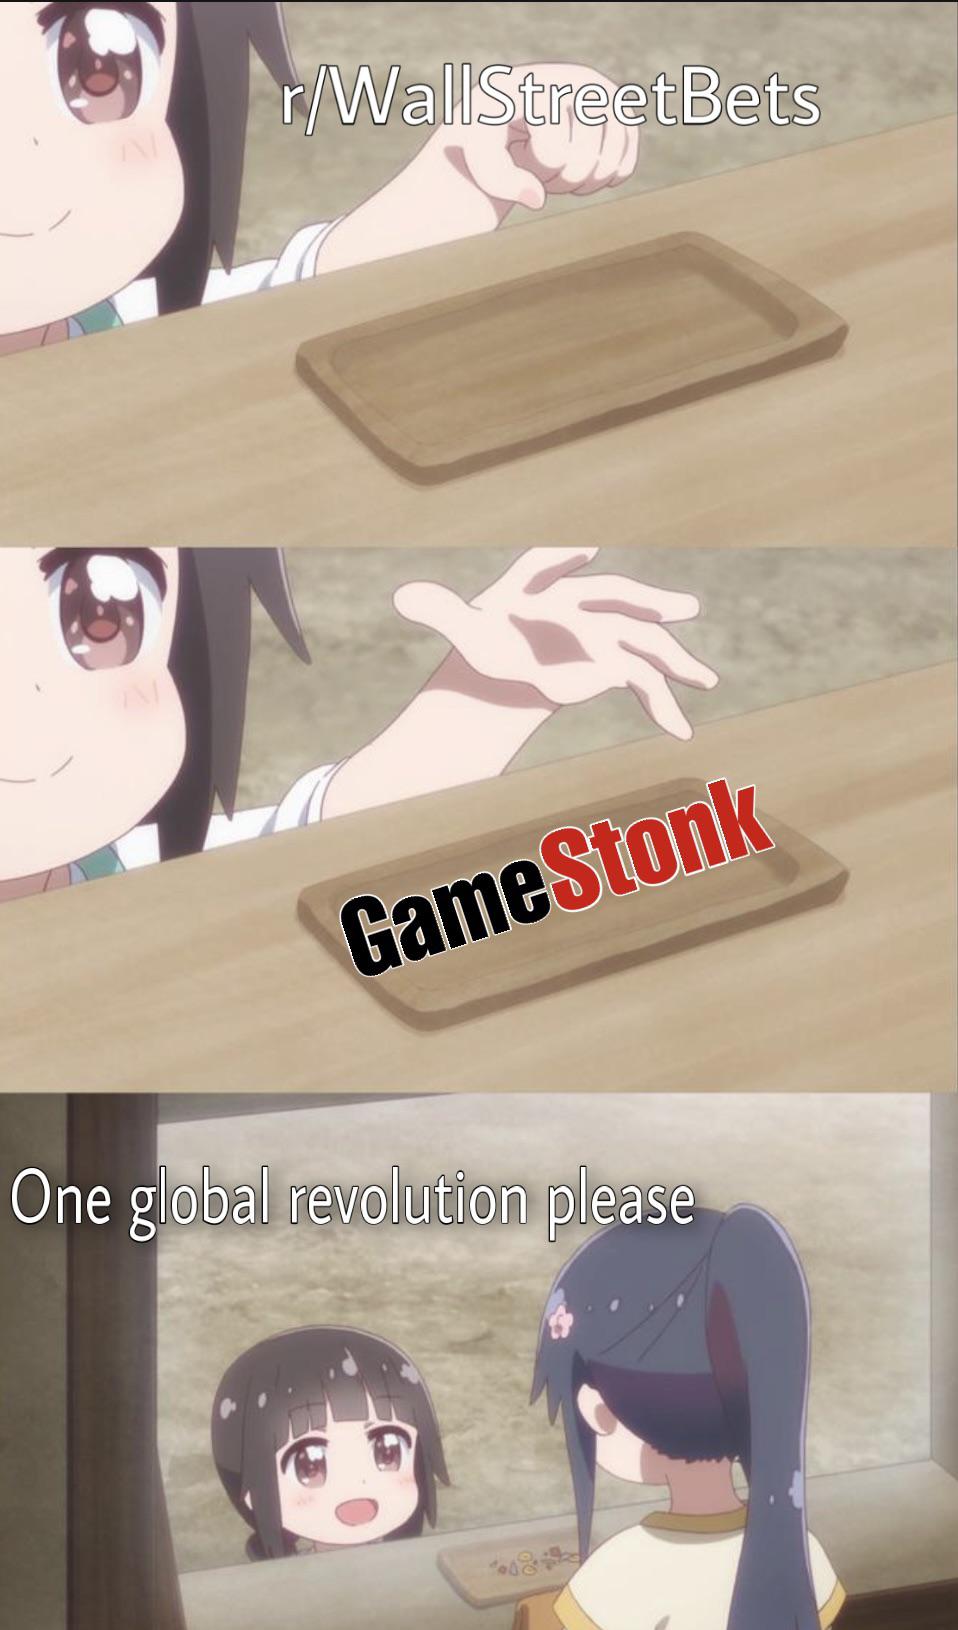 anime meme format - rWallStreetBets GameStonk One global revolution please